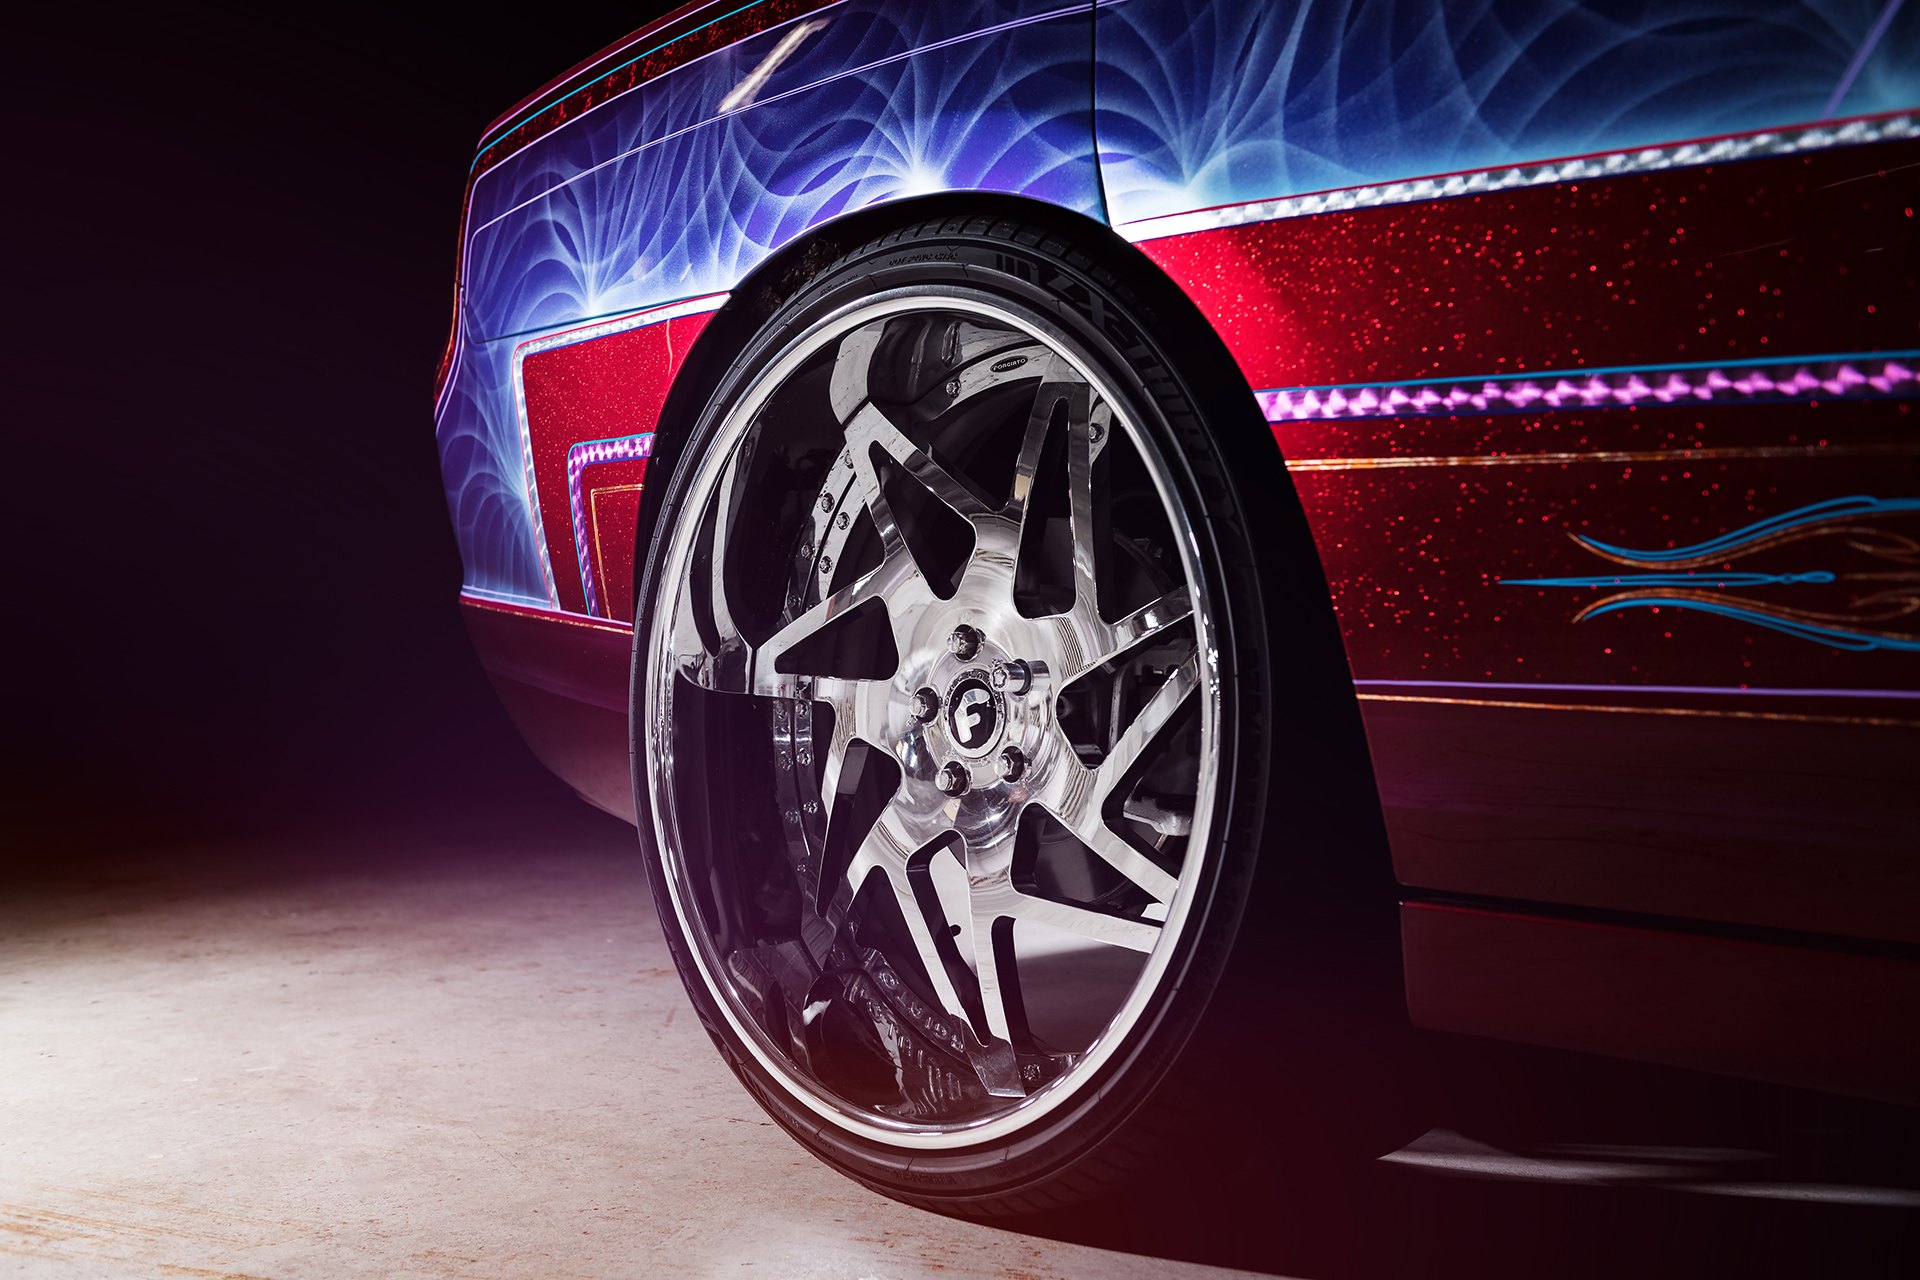 Chrome Forgiato Wheels on Red Dodge Charger - Photo by Forgiato